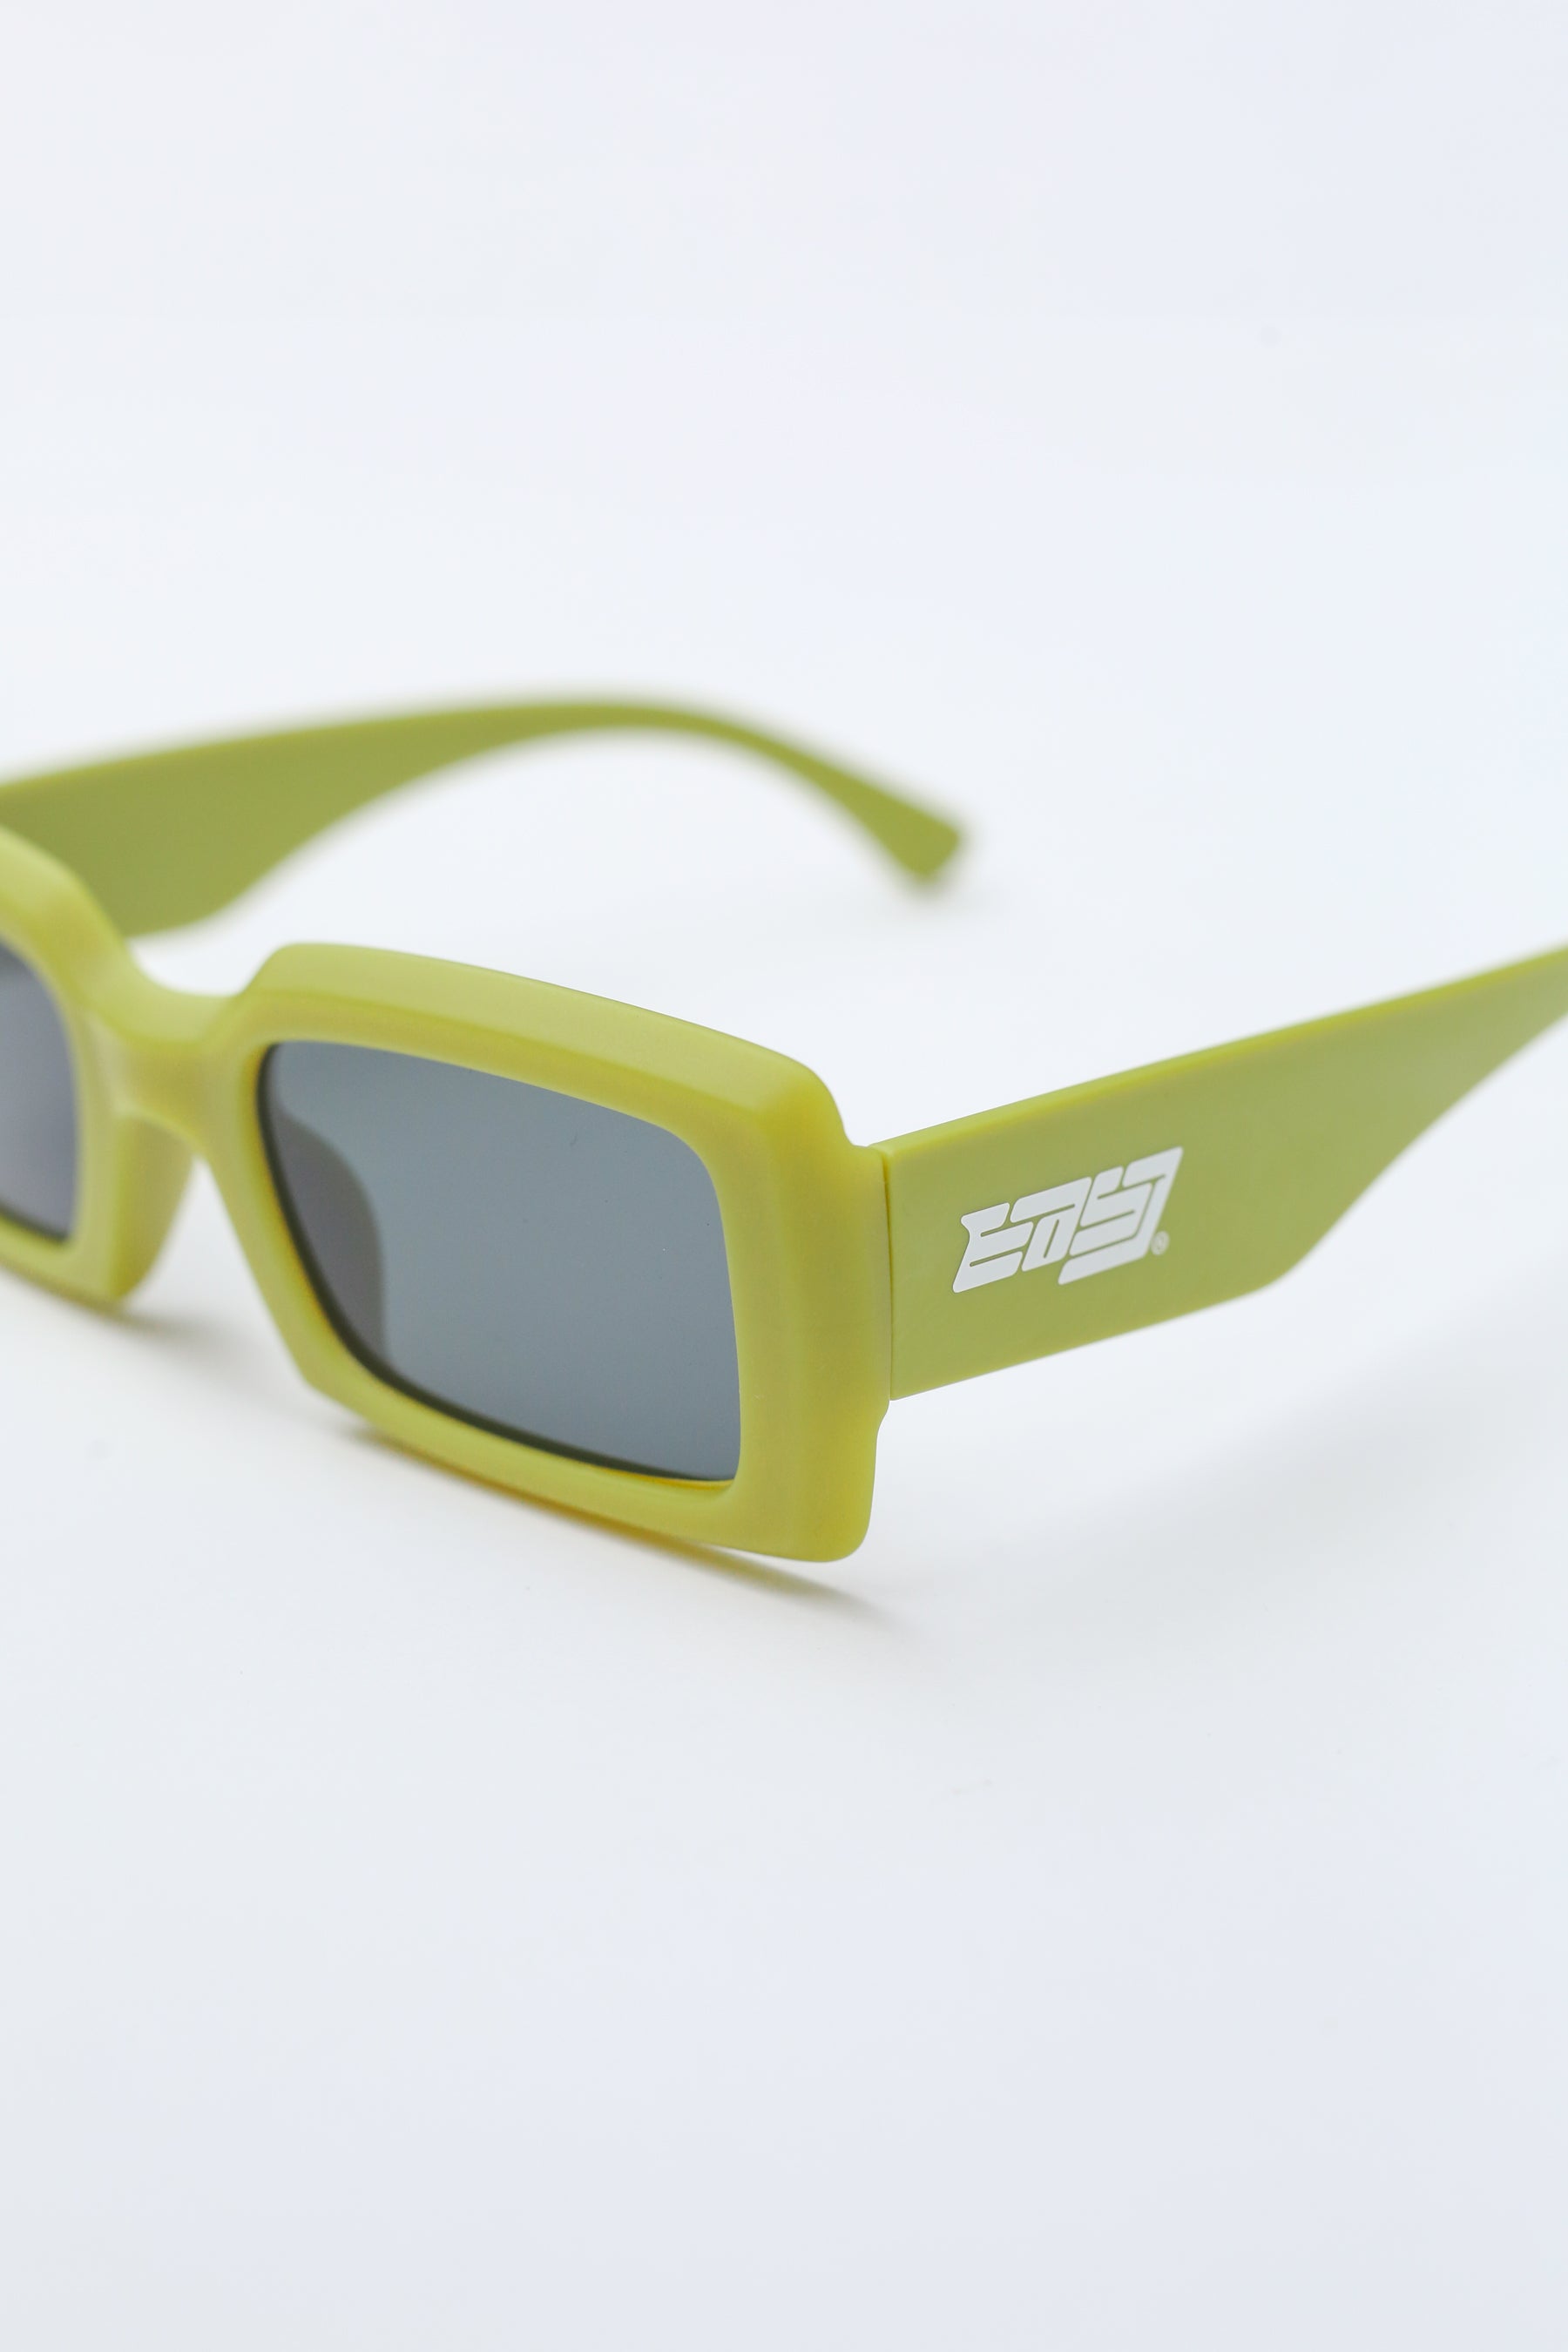 Green EA$Y Sunglasses